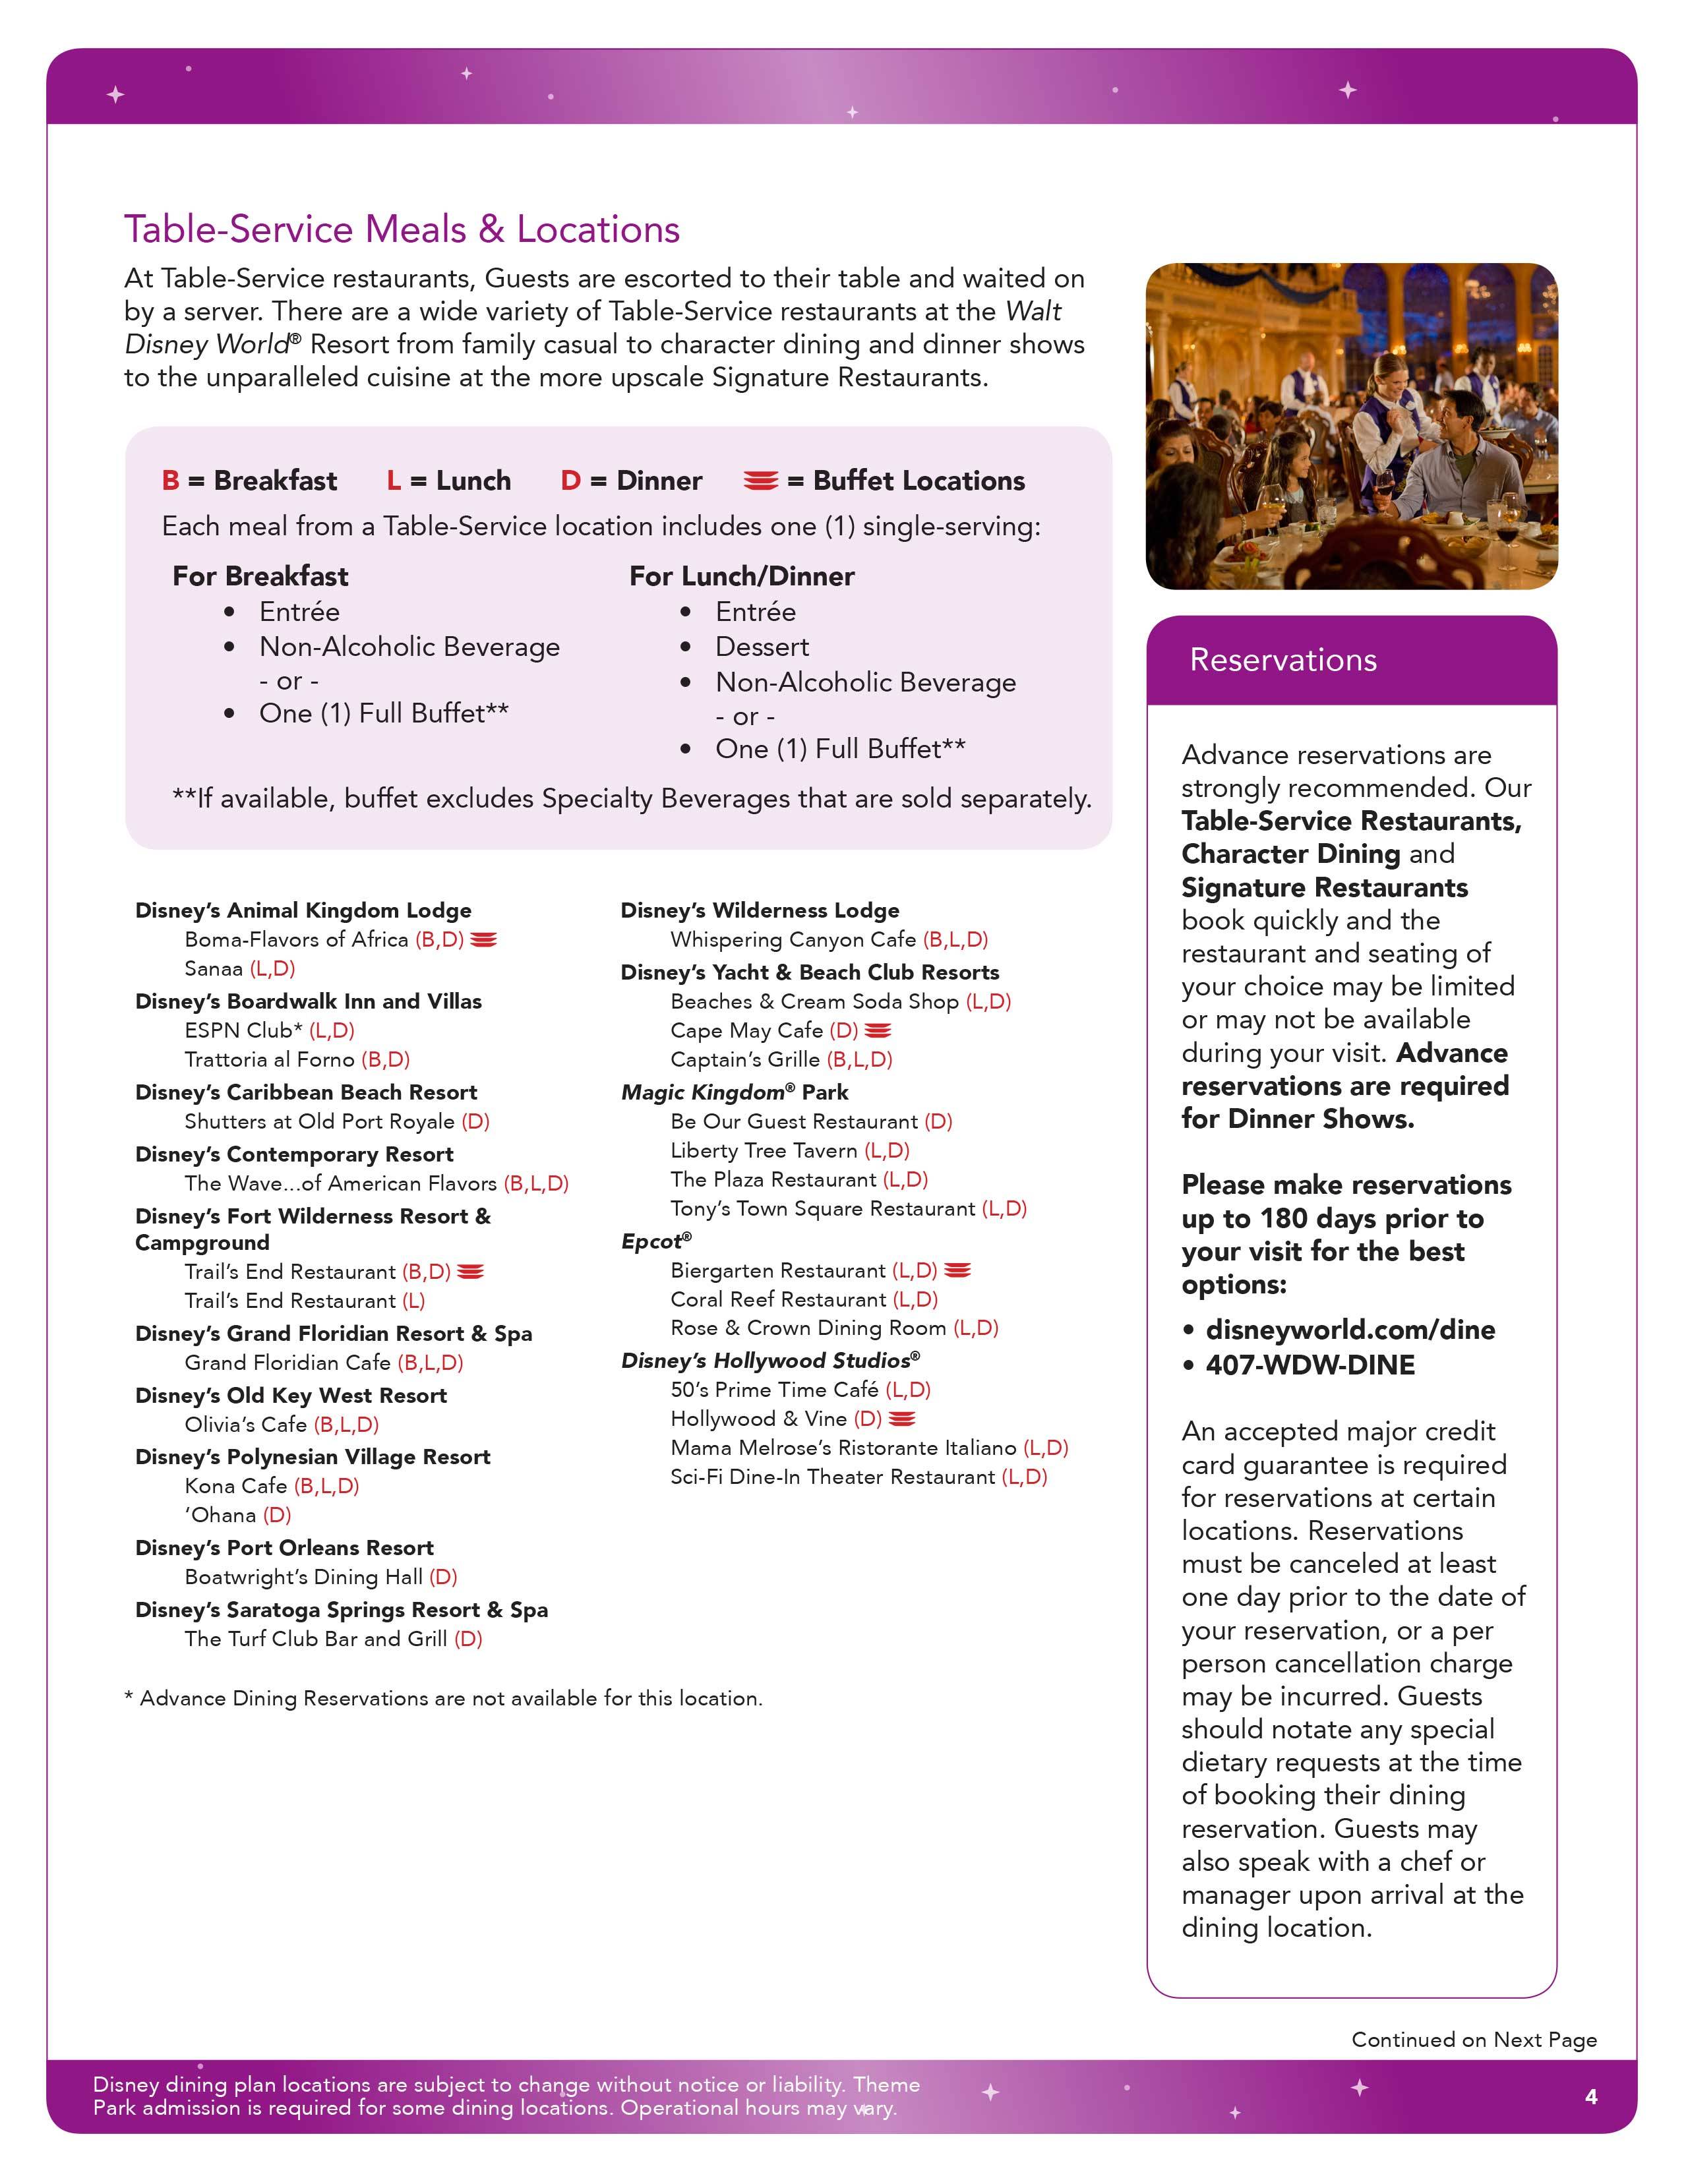 2016 Disney Dining Plan brochure - Page 4